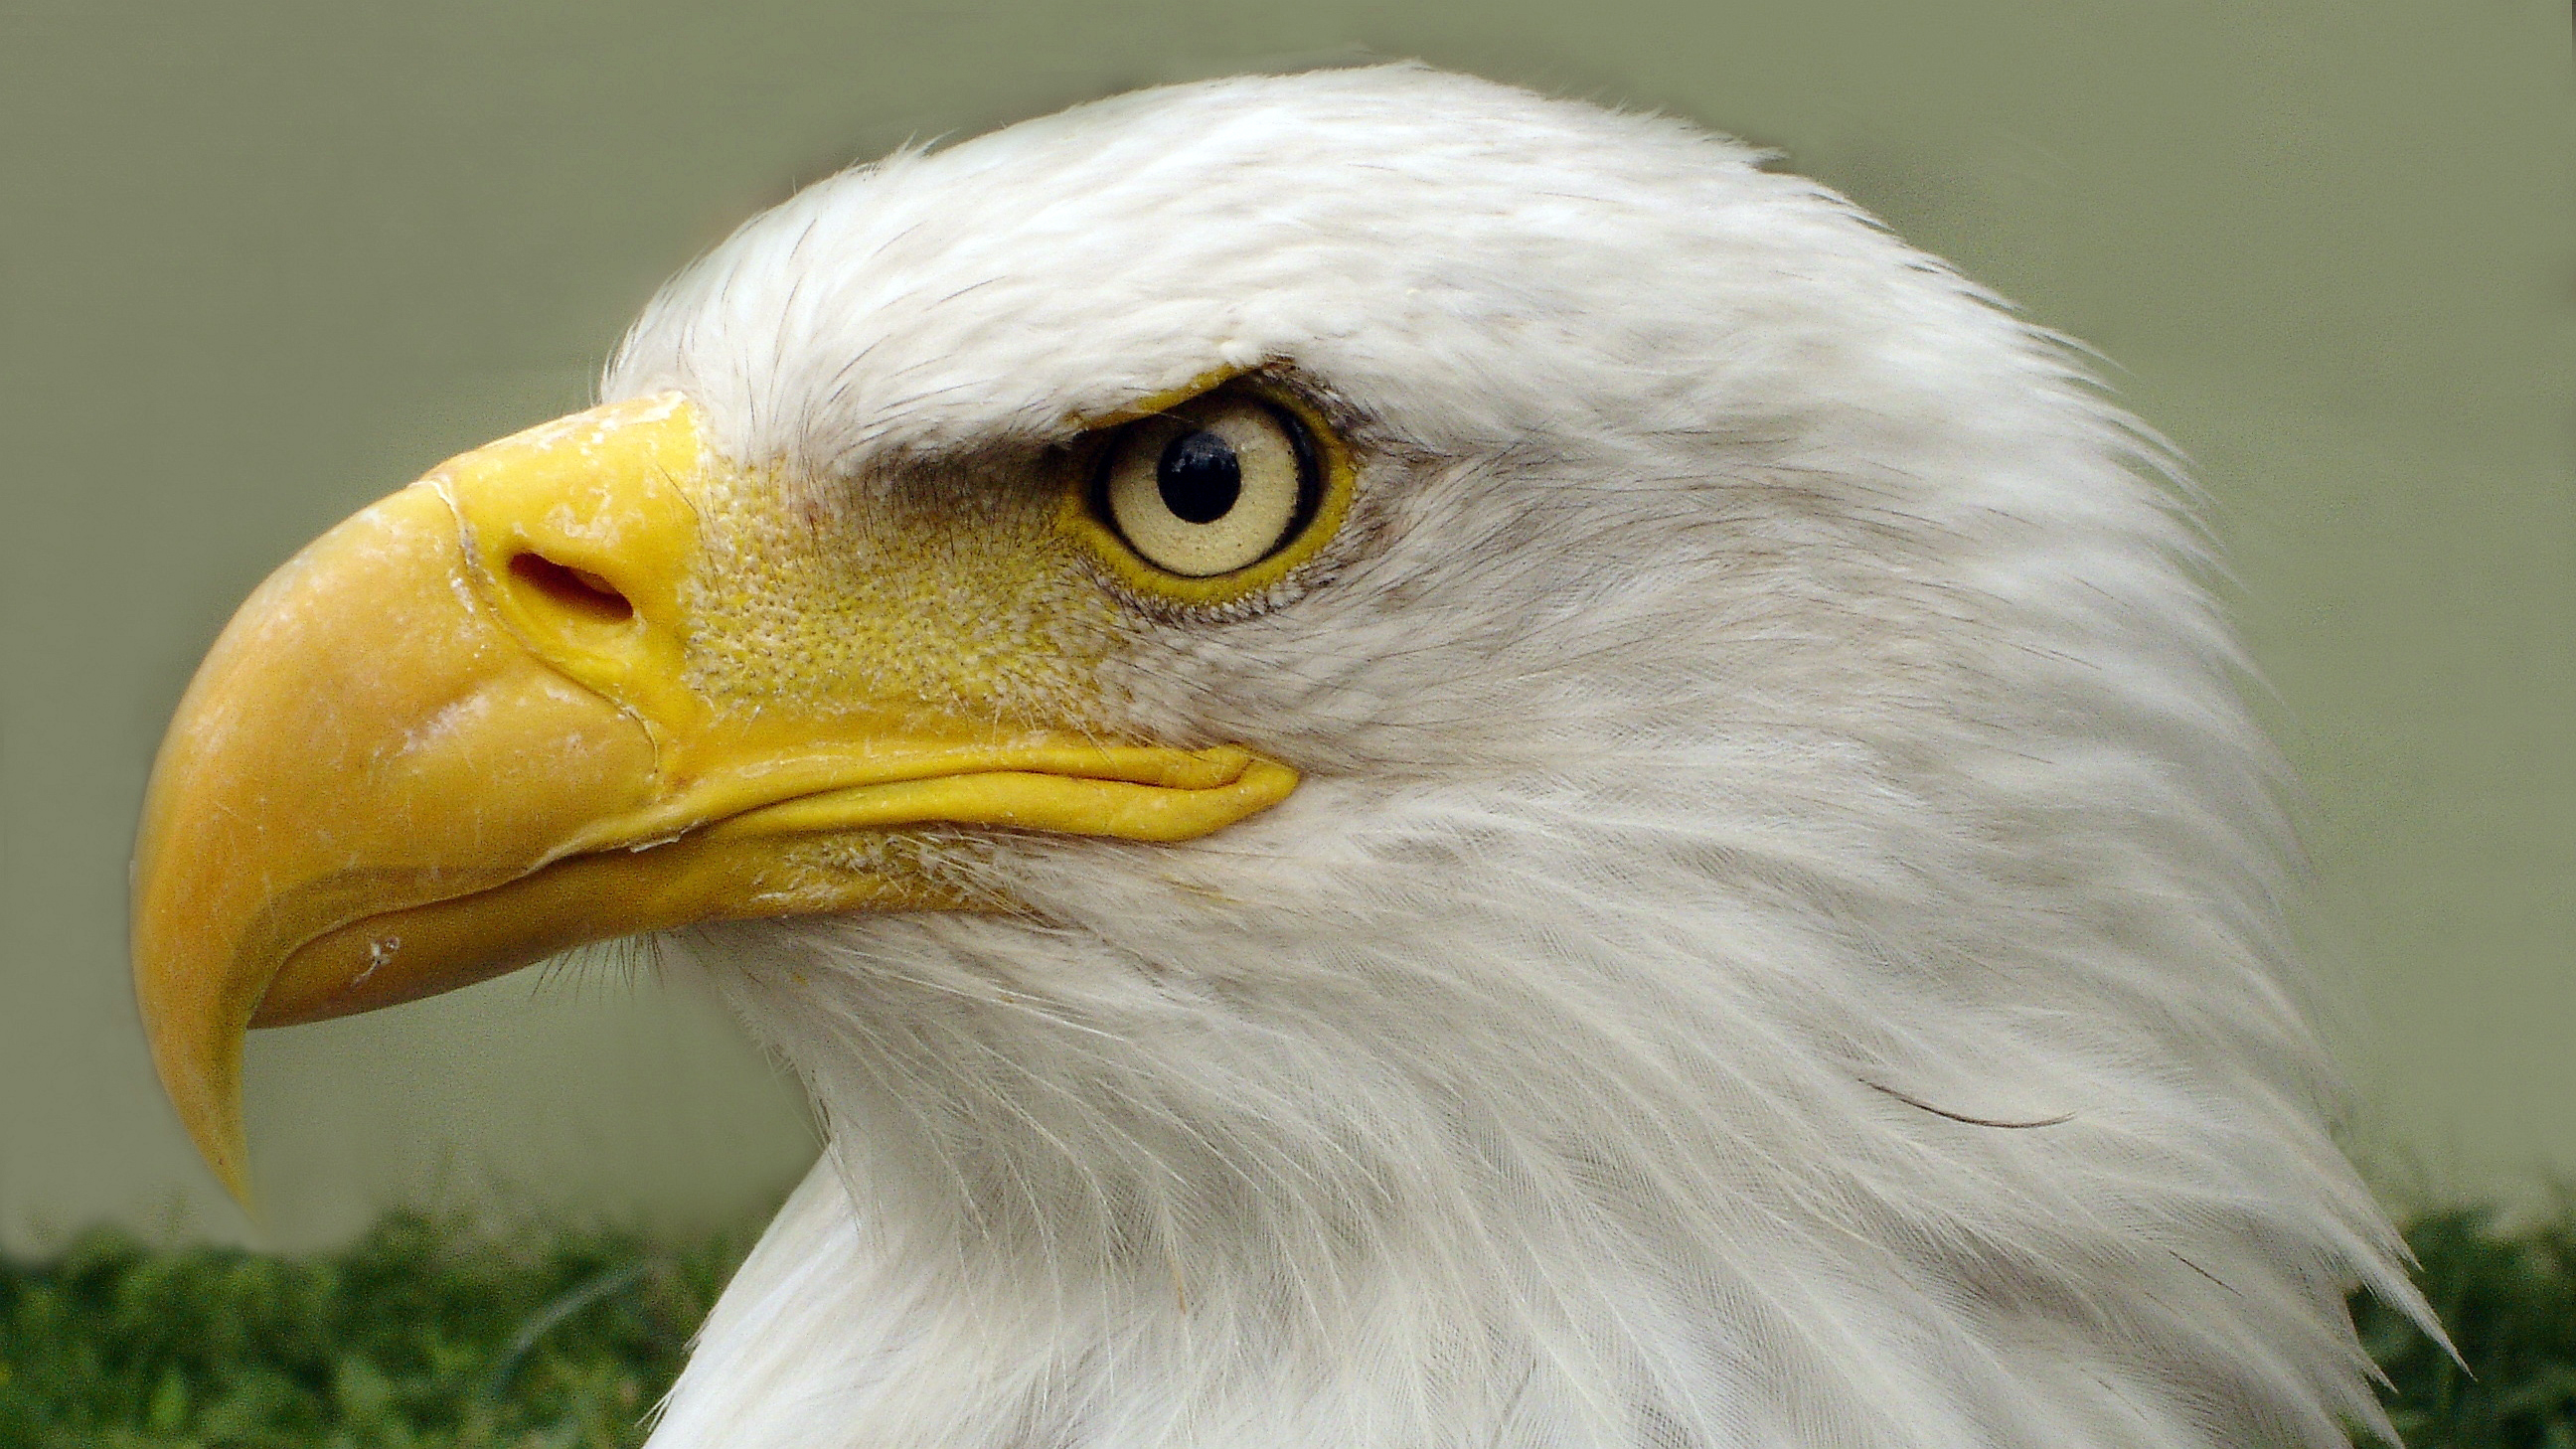 File:Bald eagle closeup 16x9.jpg - Wikimedia Commons